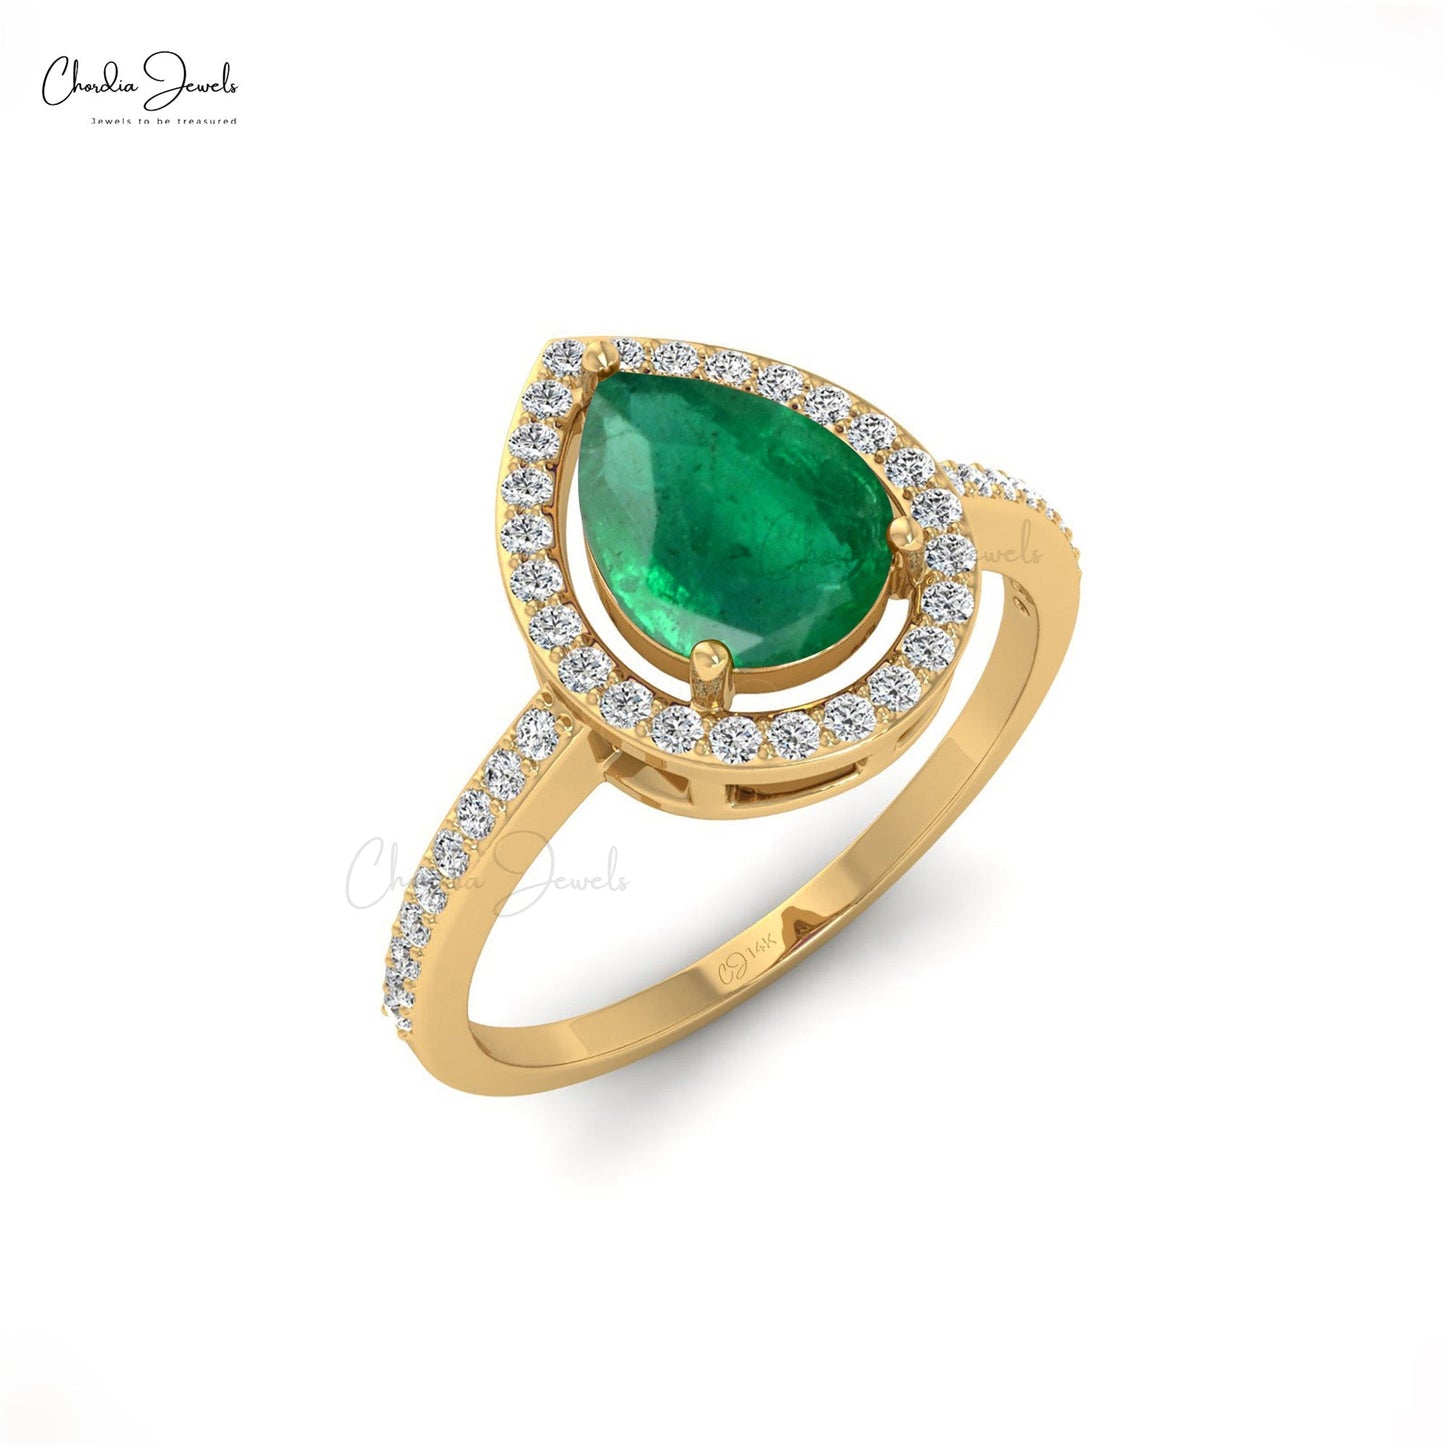 Natural Zambian Emerald 8X6MM Elegant Pear Cut Emerald Halo Ring